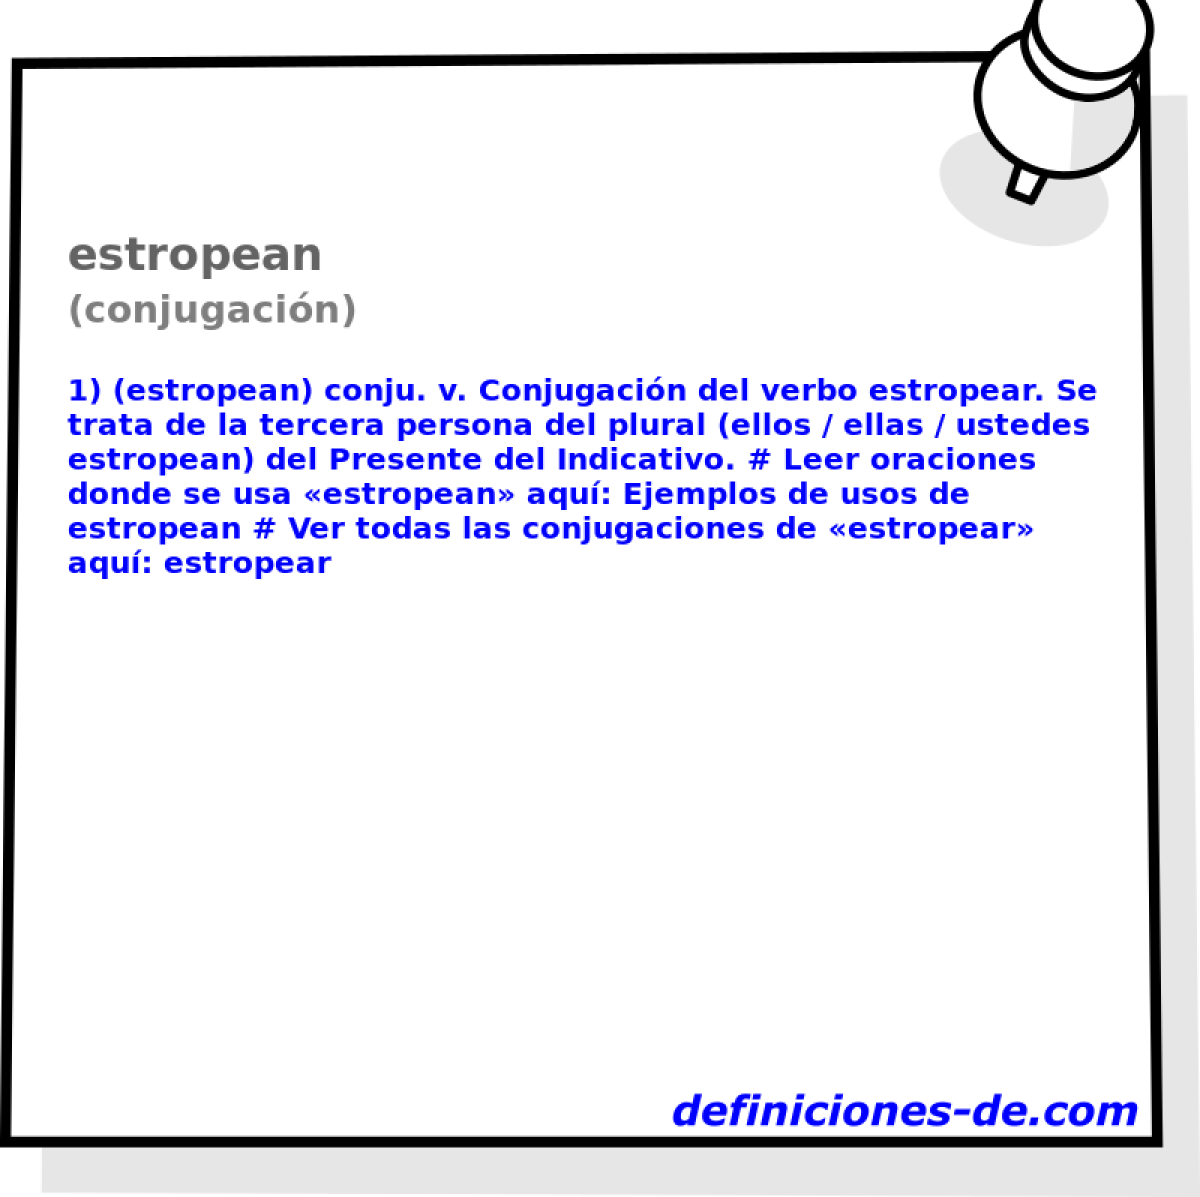 estropean (conjugacin)